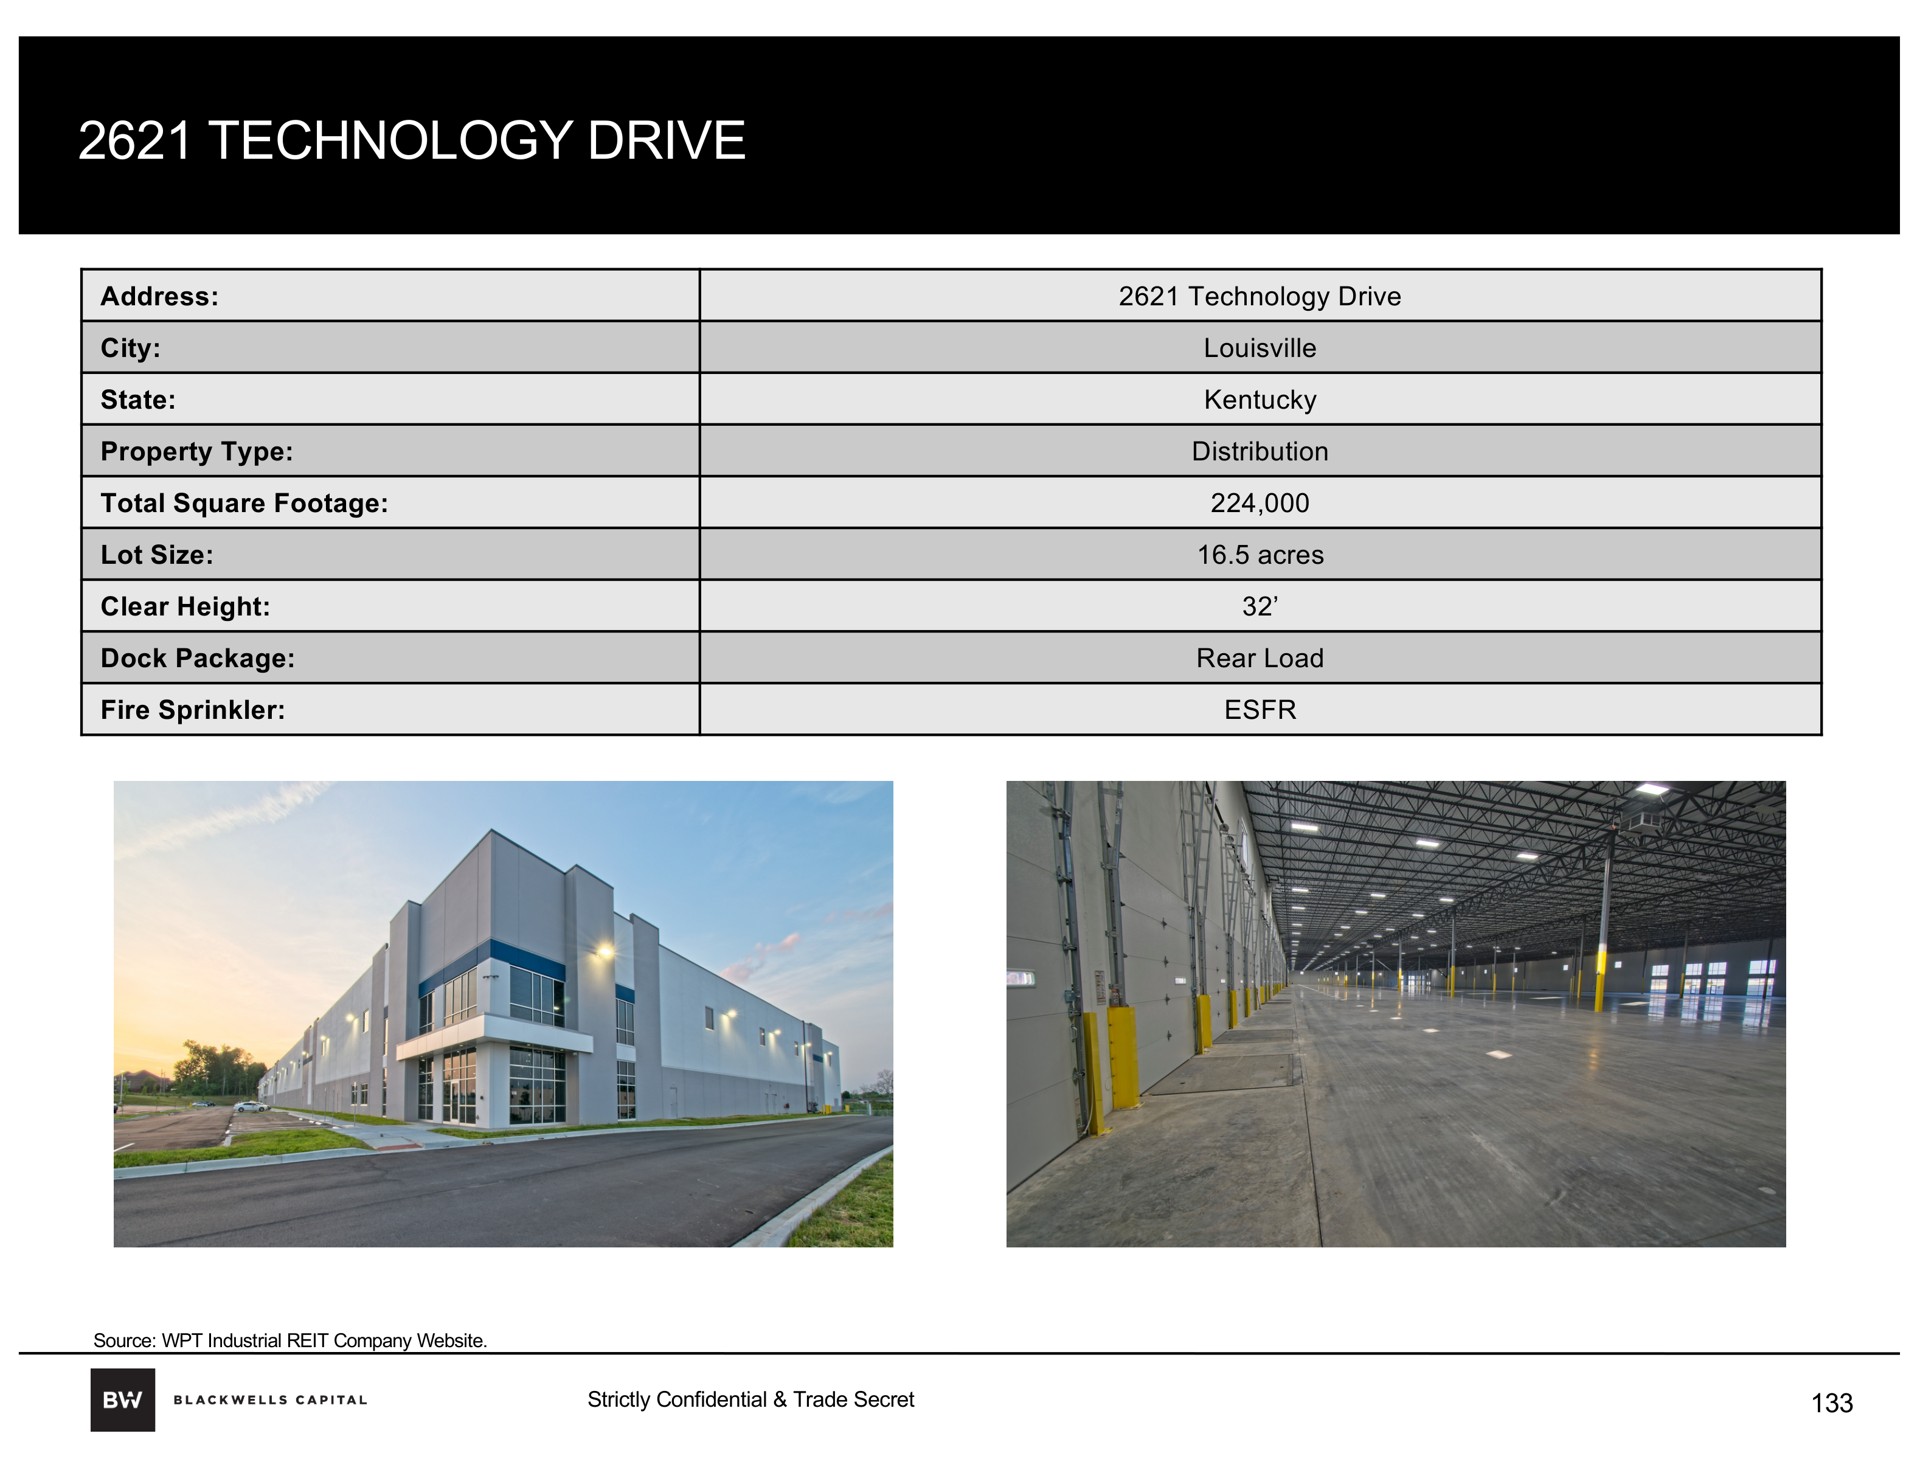 technology drive | Blackwells Capital